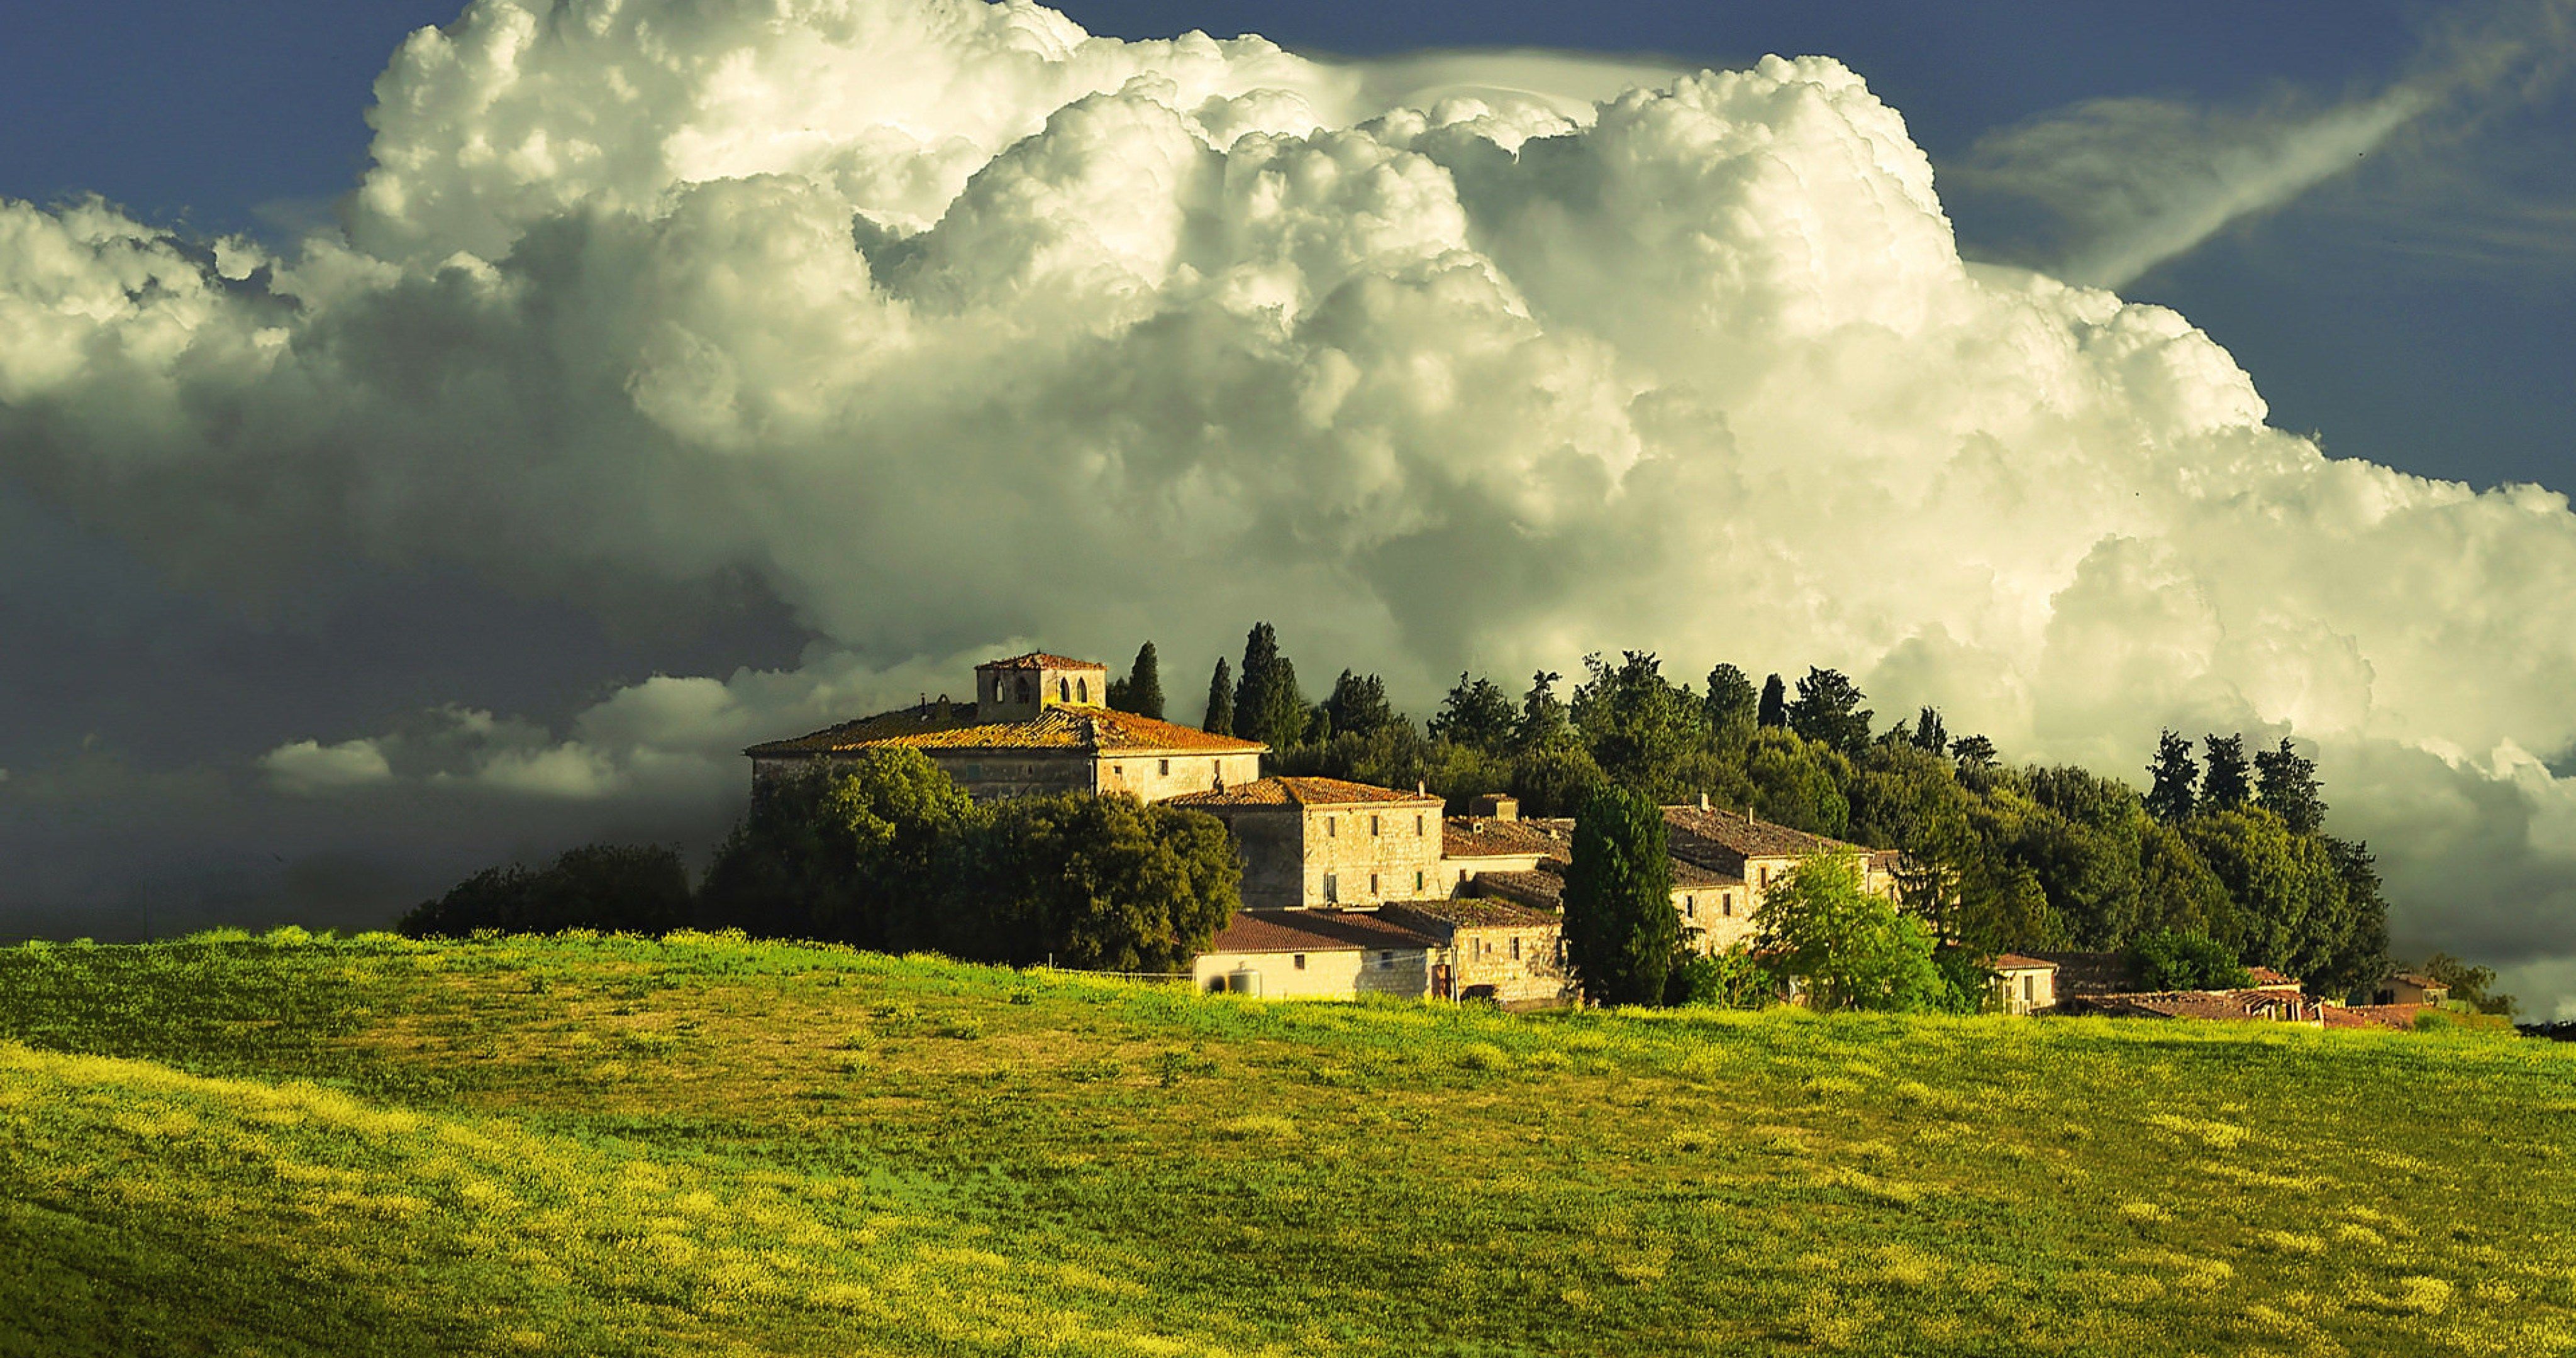 amazing italian place 4k ultra HD wallpaper. Tuscany landscape